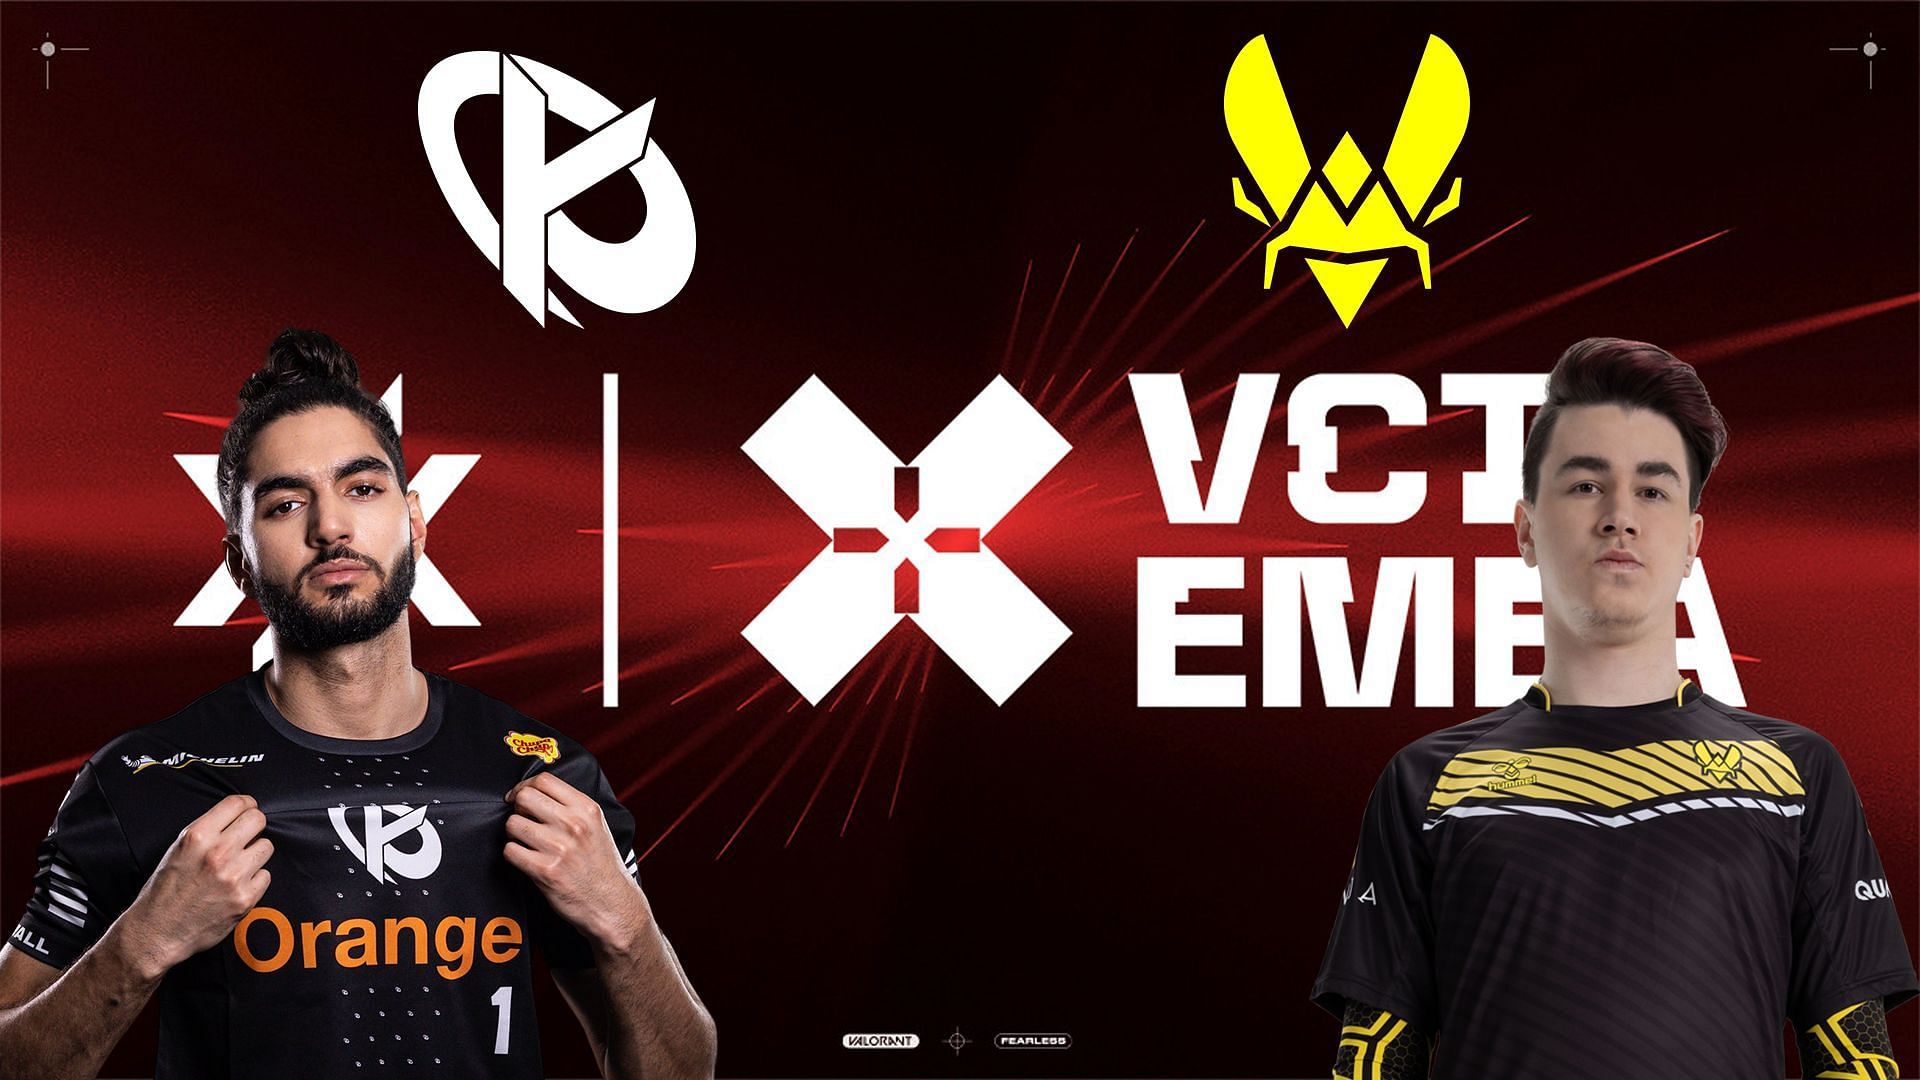 Karmine Corp vs Team Vitality at the VCT EMEA League 2023 (Image via Sportskeeda)